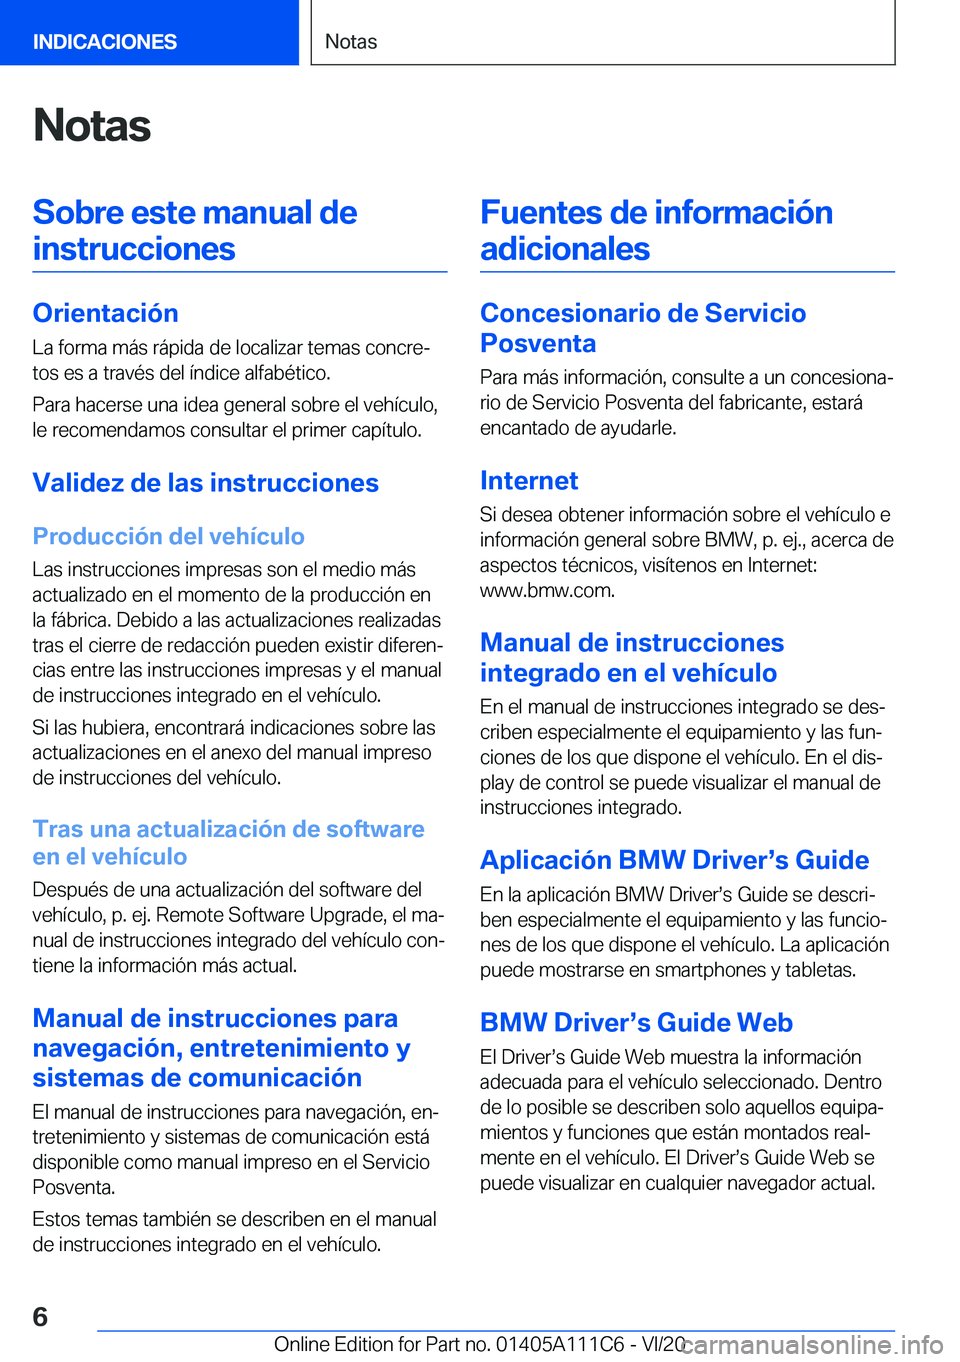 BMW 3 SERIES SEDAN PLUG-IN HYBRID 2021  Manuales de Empleo (in Spanish) �N�o�t�a�s�S�o�b�r�e��e�s�t�e��m�a�n�u�a�l��d�e�i�n�s�t�r�u�c�c�i�o�n�e�s
�O�r�i�e�n�t�a�c�i�